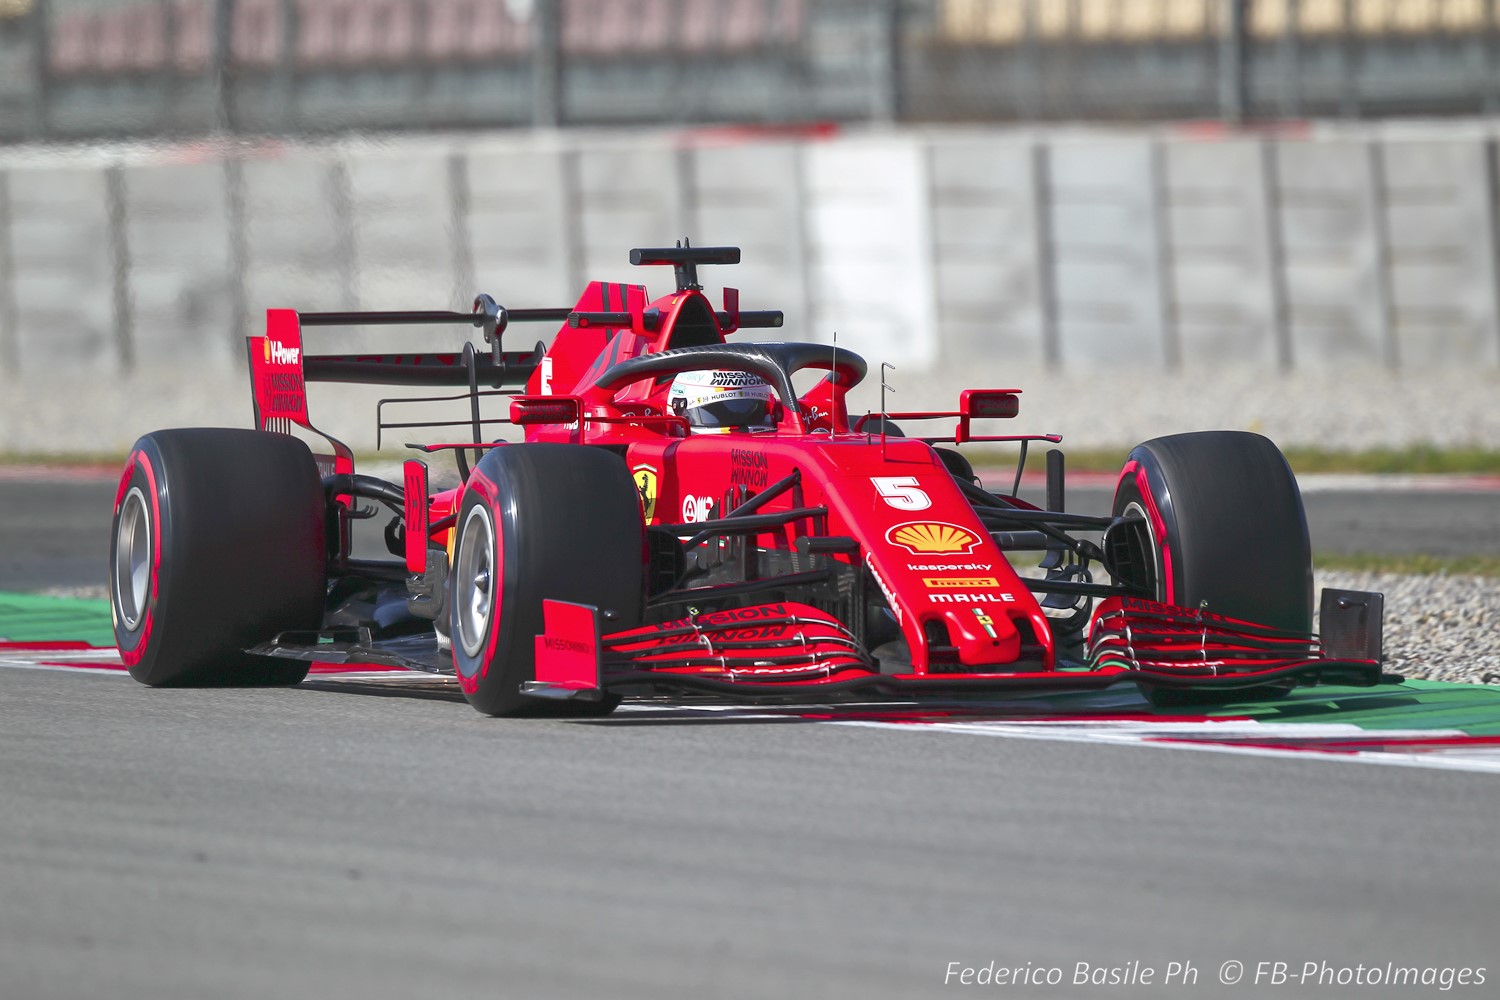 New Ferrari - too much drag